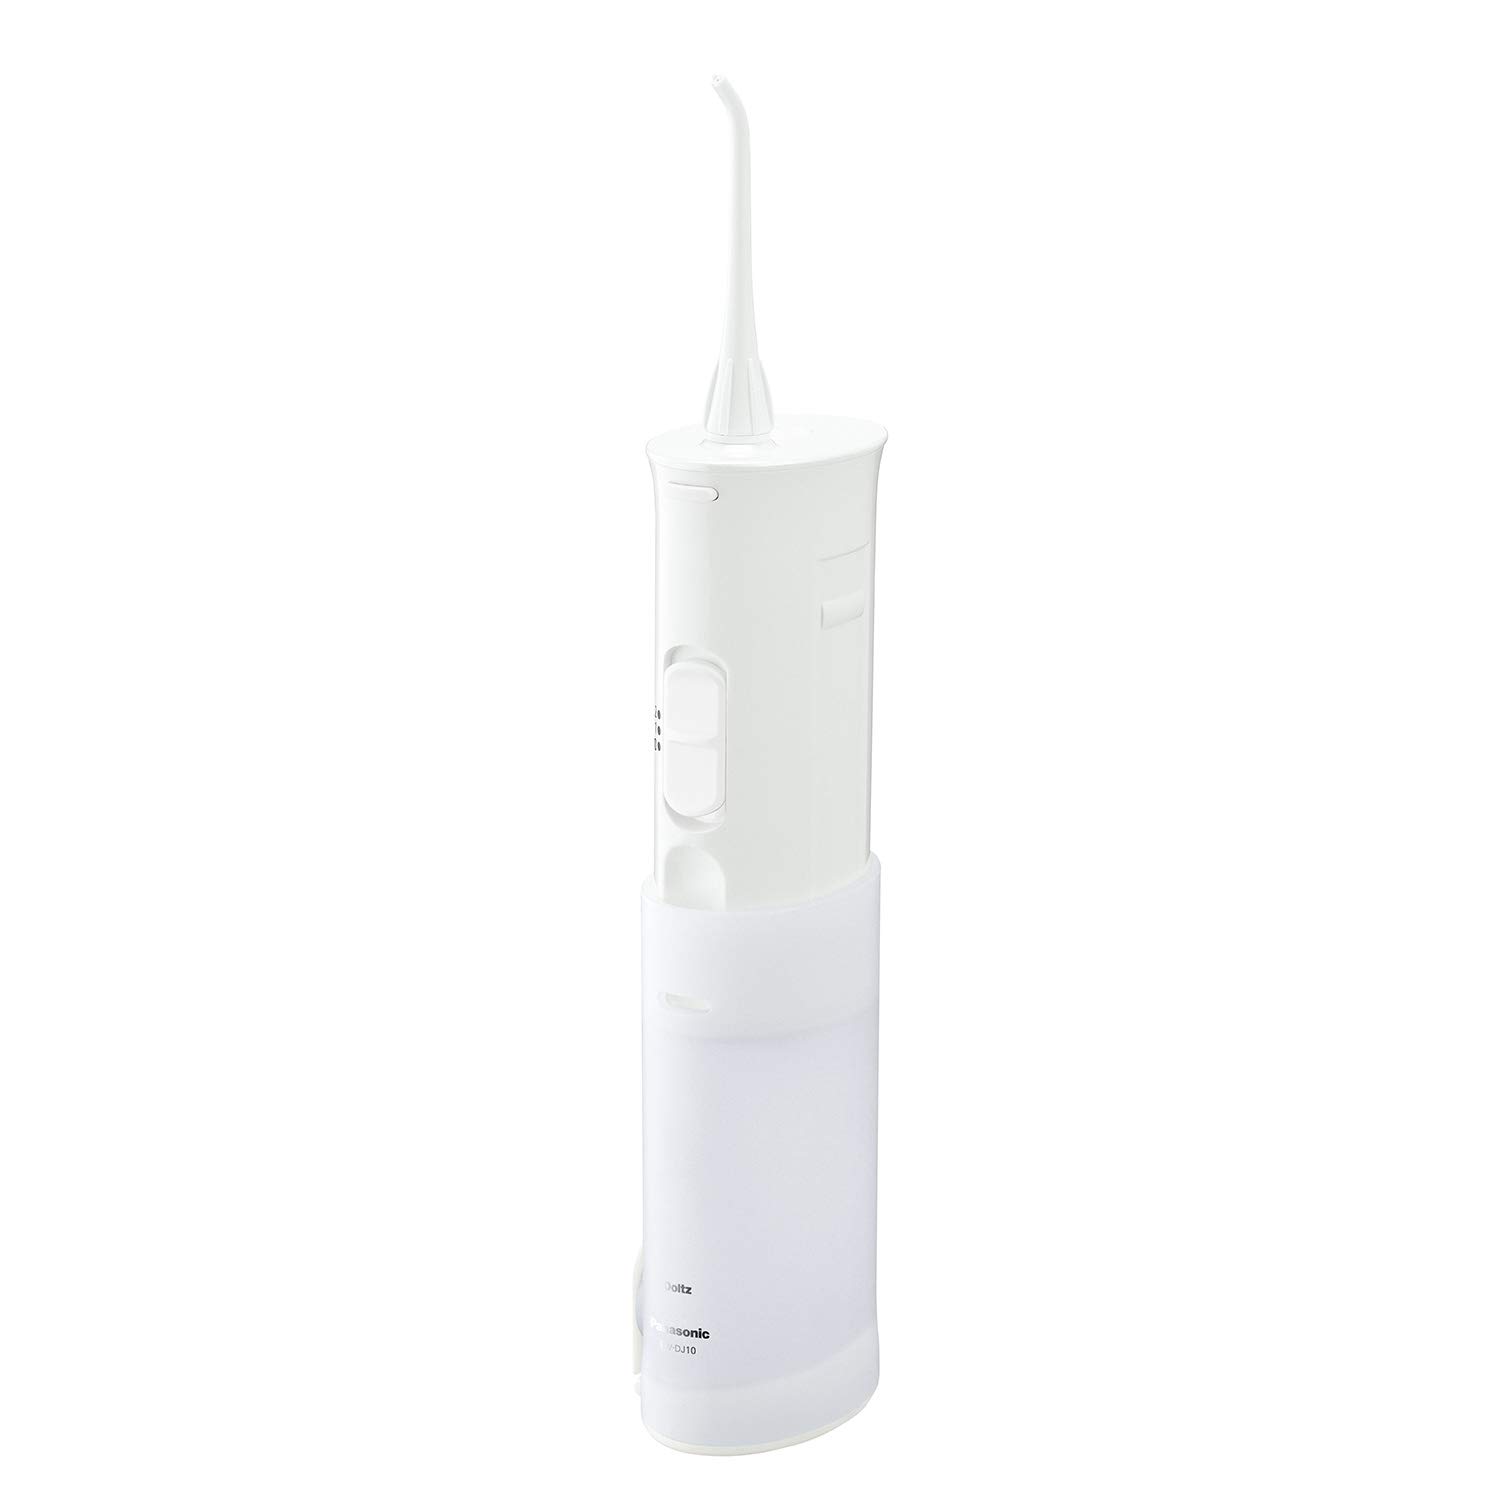 Panasonic Portable Water Flosser EW-DJ10-W (White) $24.99 + Free Shipping w/ Prime or $25+